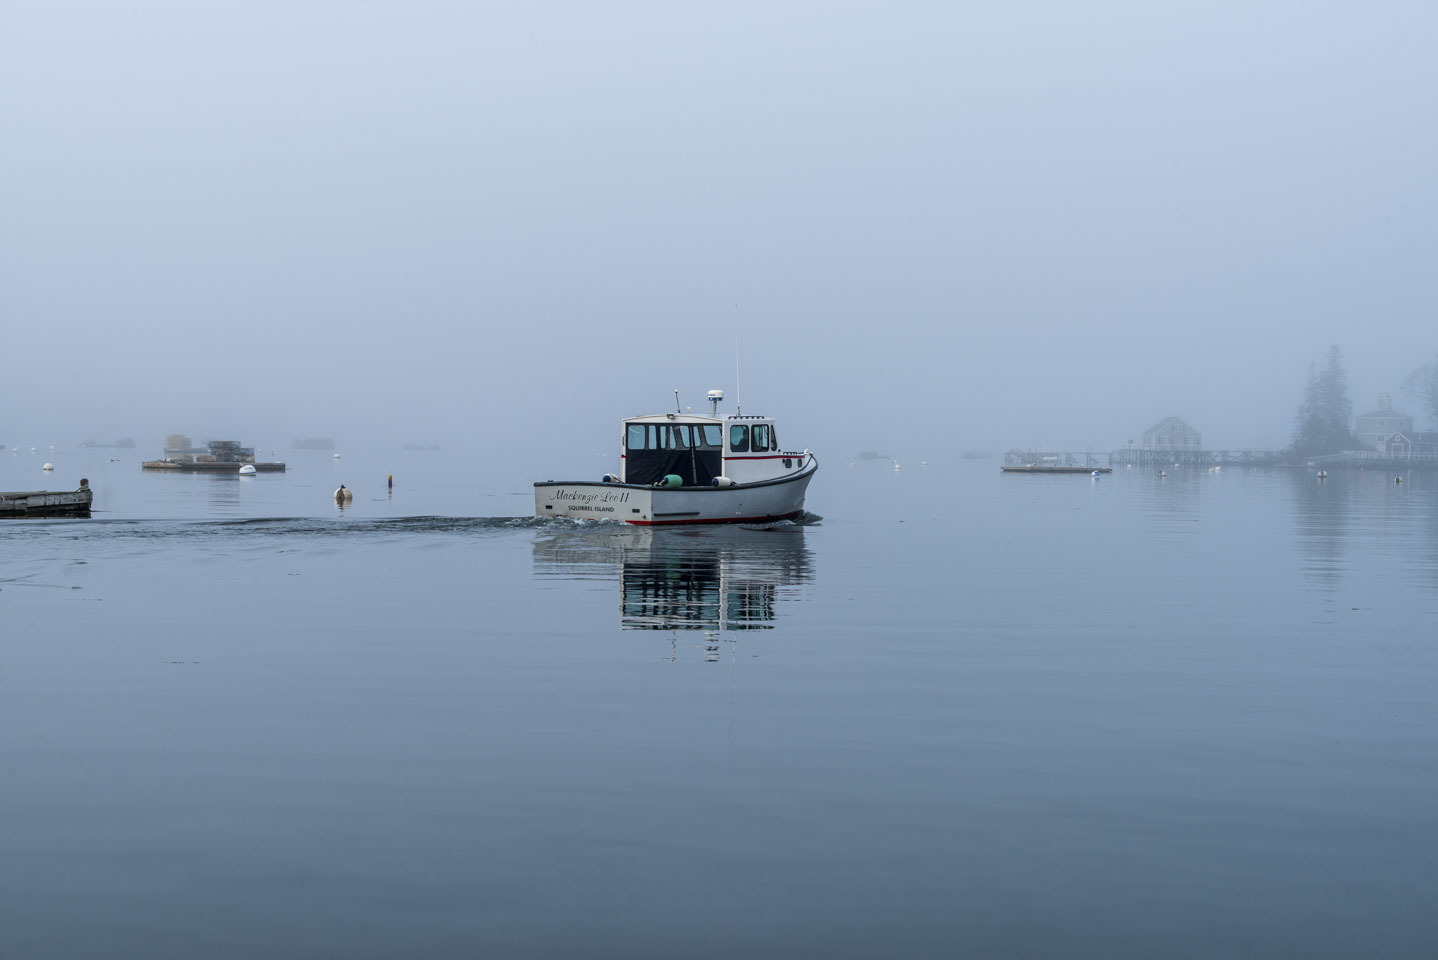 The boat Mackenzie Lee II, Squirrel Island, heading out in the fog